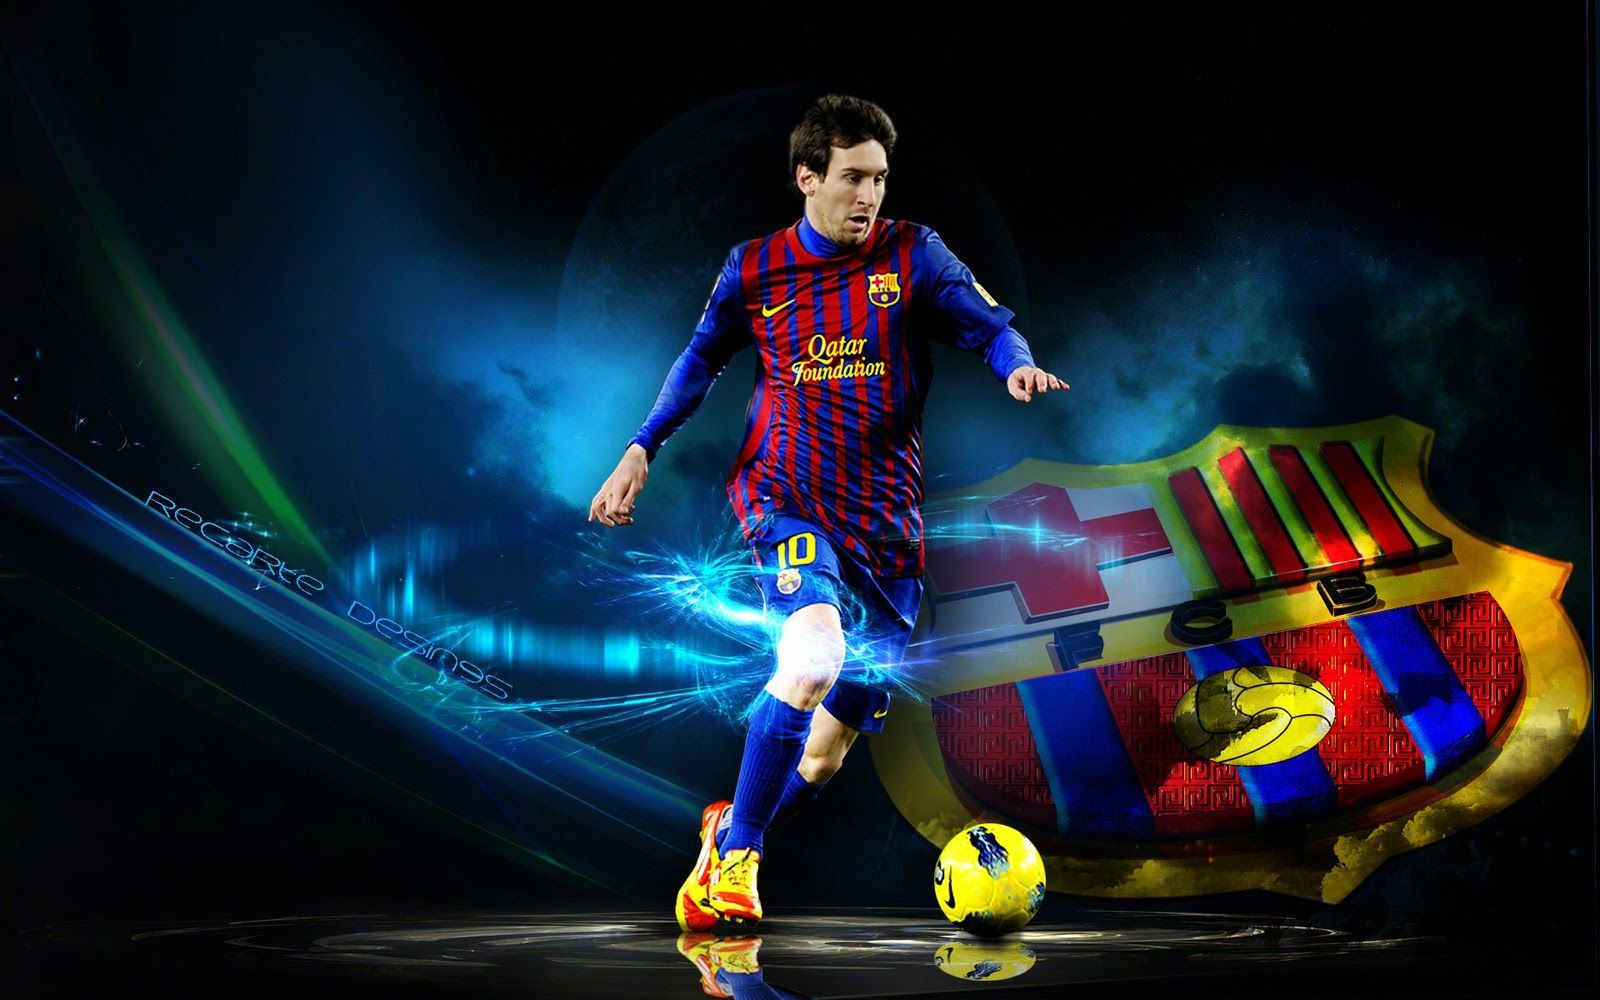 Más de 50 fondos de pantalla de Messi Soccer - Descarga